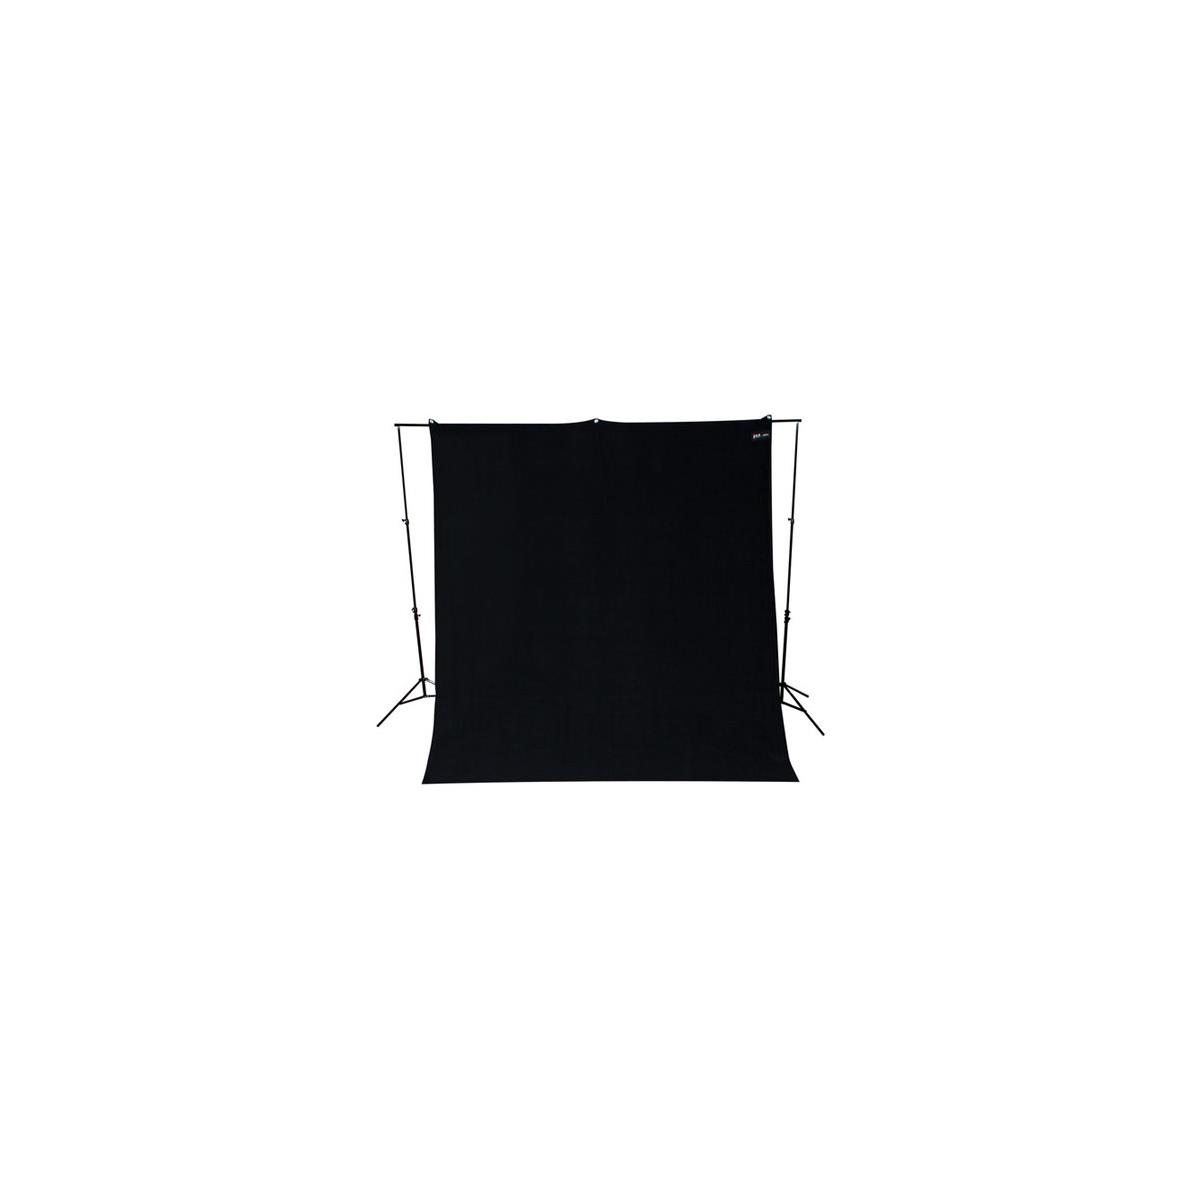 Westcott 133 9 x 10' Wrinkle-Resistant Cotton Backdrop (Rich Black)